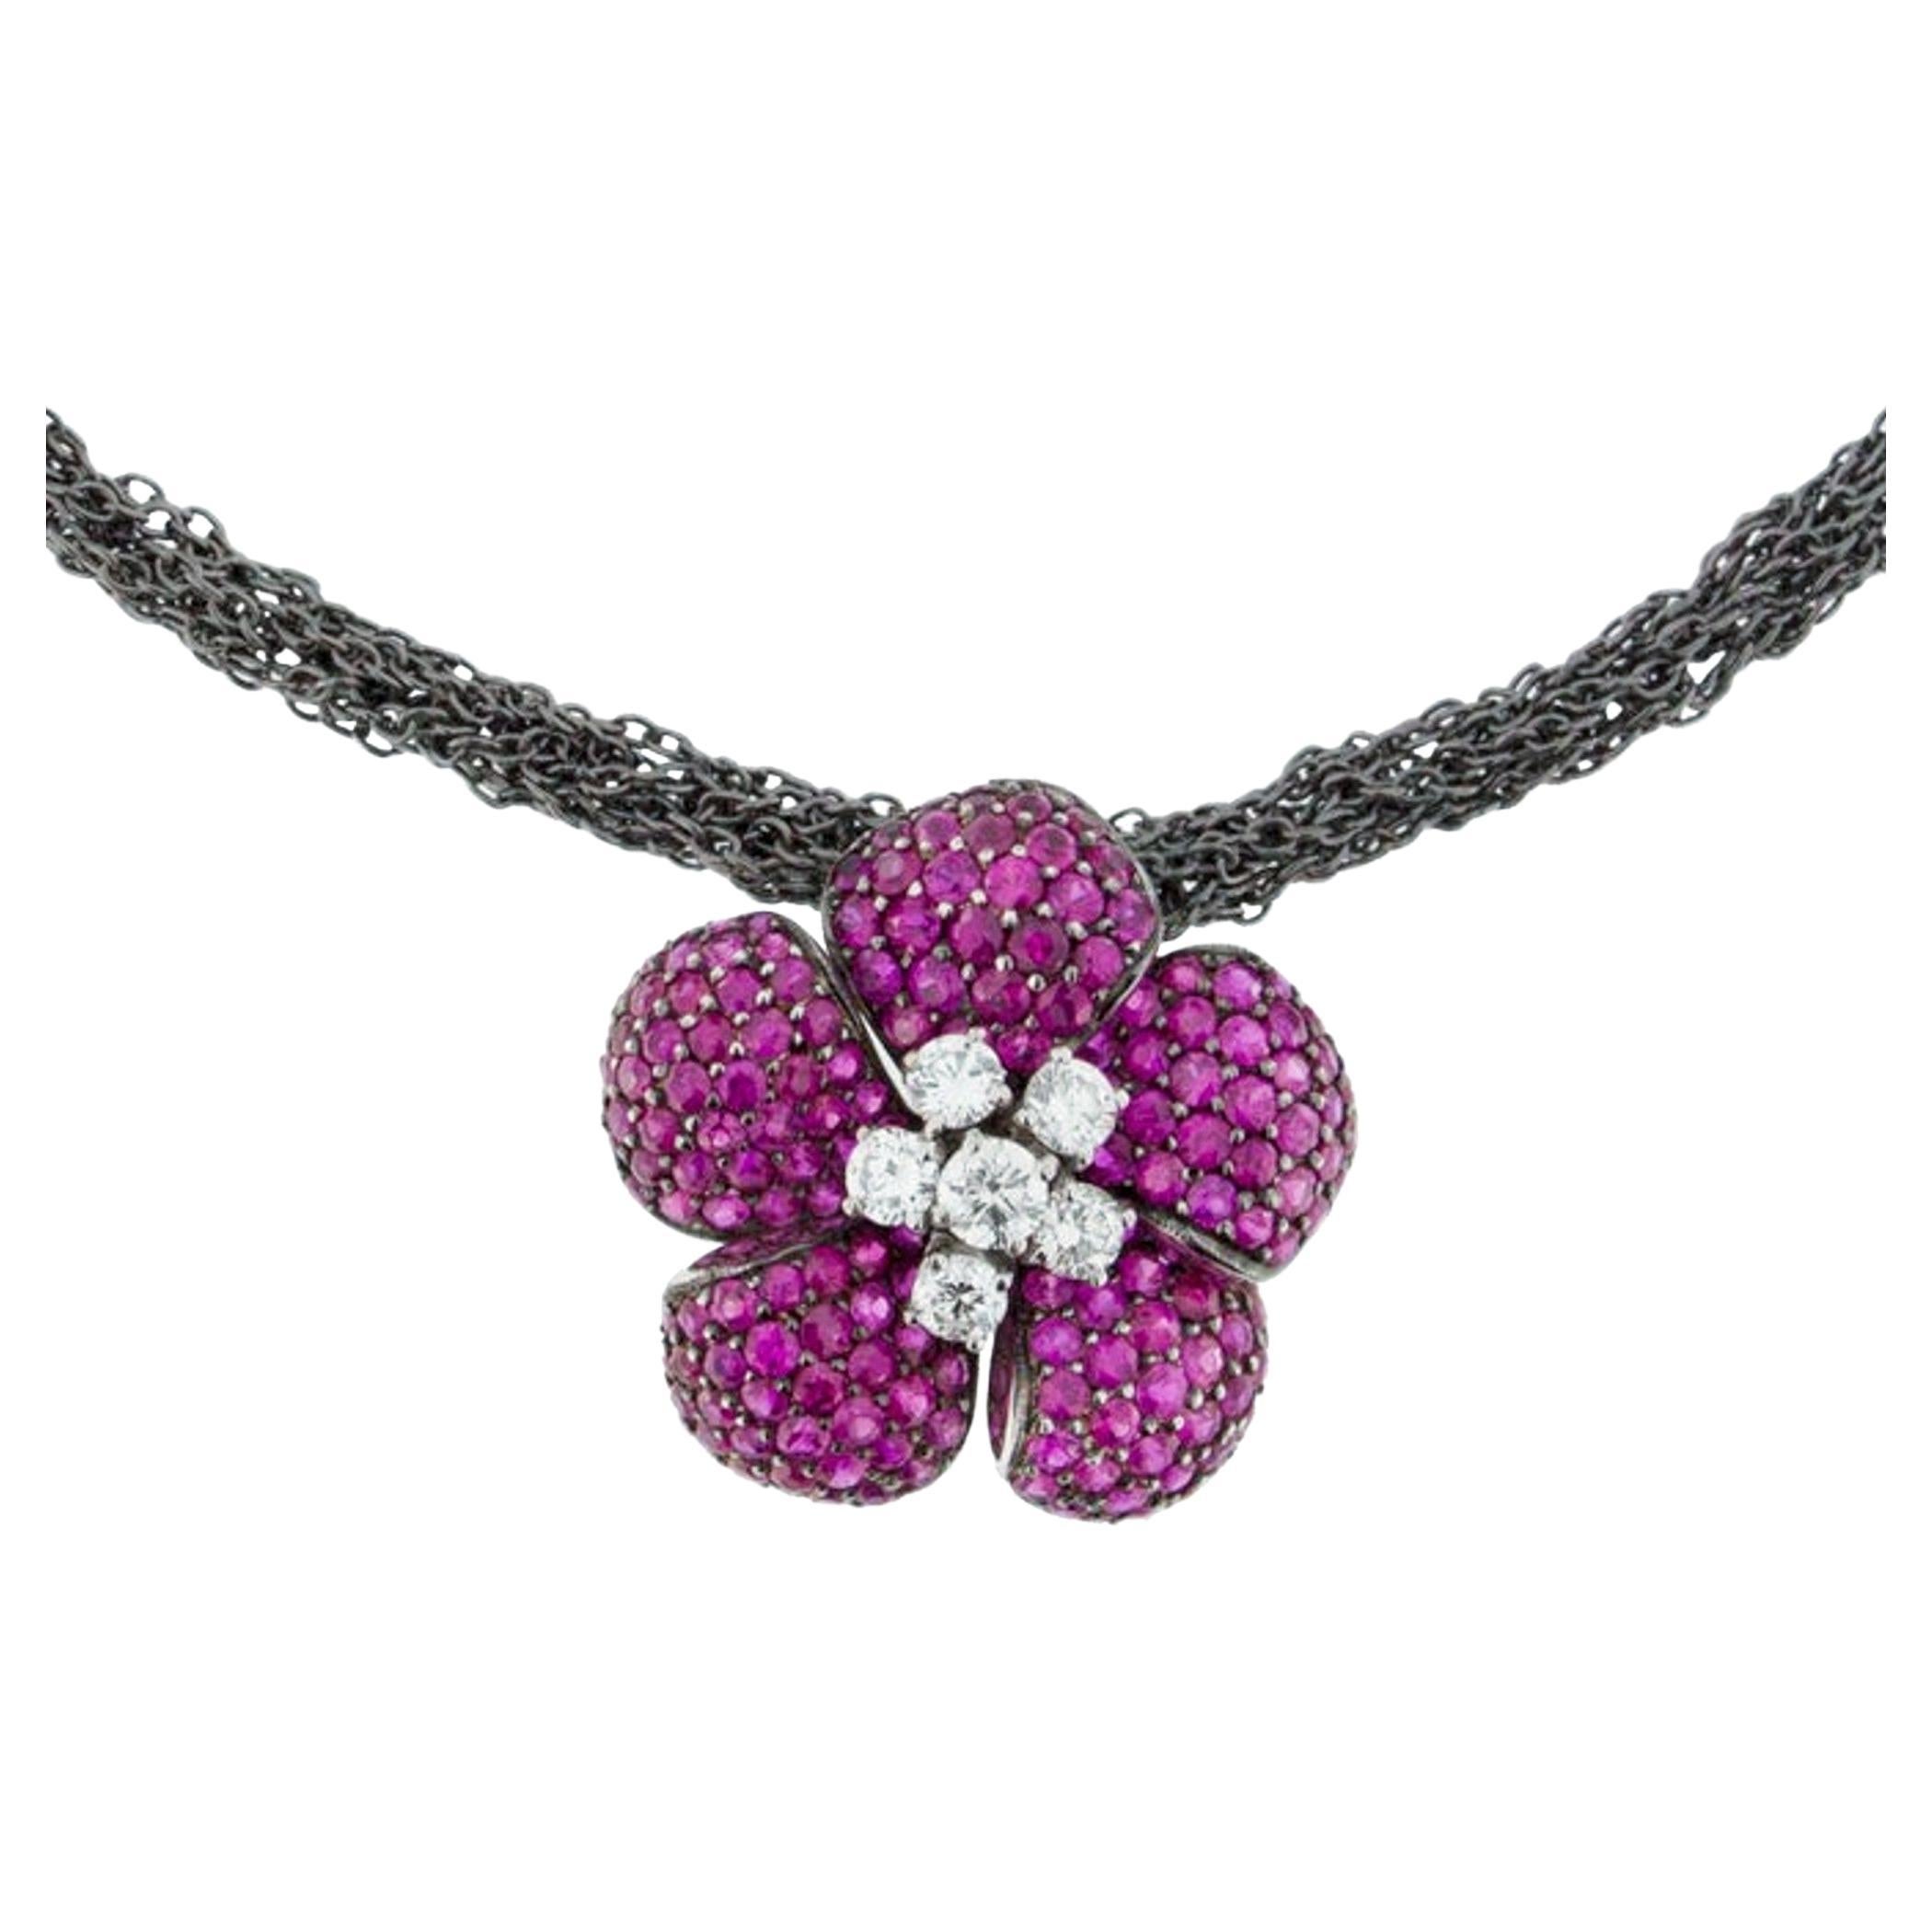 Alex Jona Ruby White Diam. 18Karat Gold Flower Pendant on Silver Chain Necklace